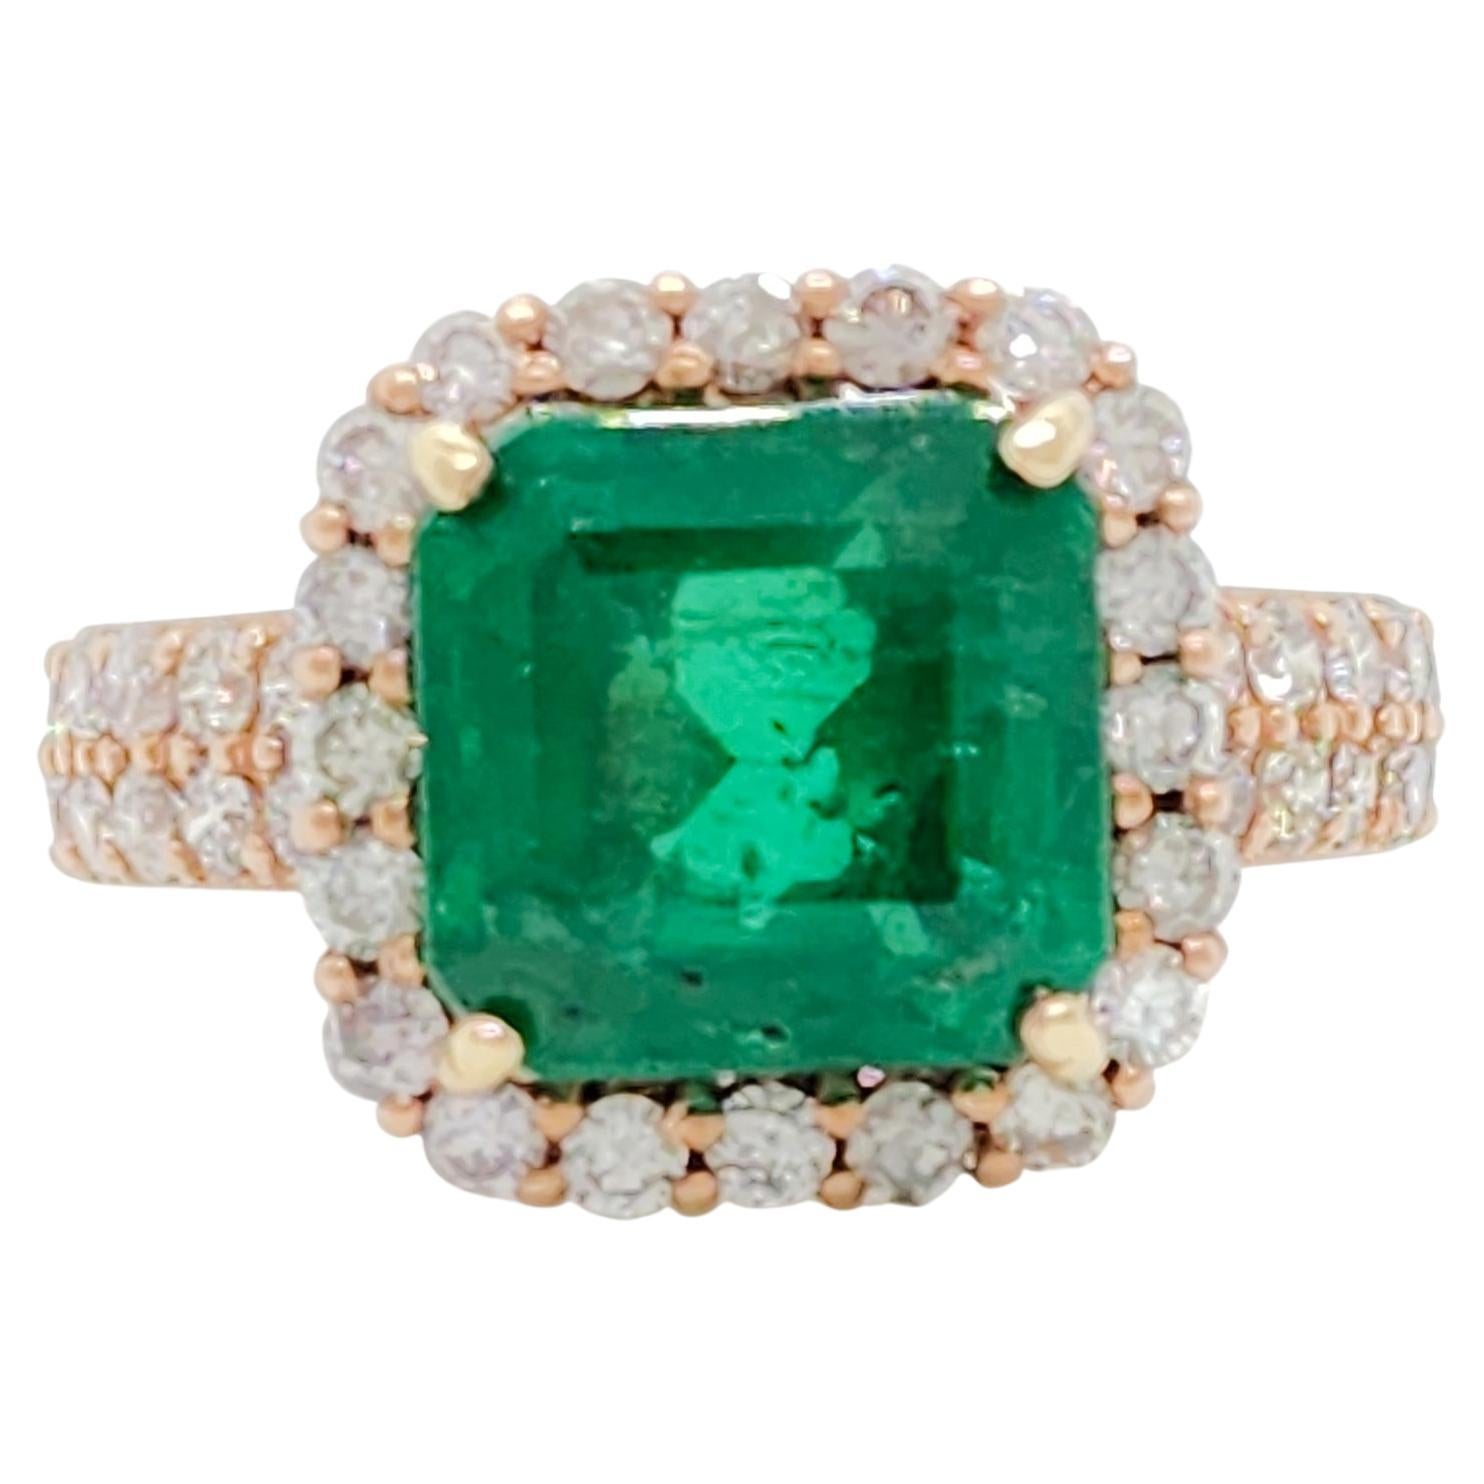 C. Dunaigre Zambian Emerald and Diamond Cocktail Ring in 18k Rose Gold